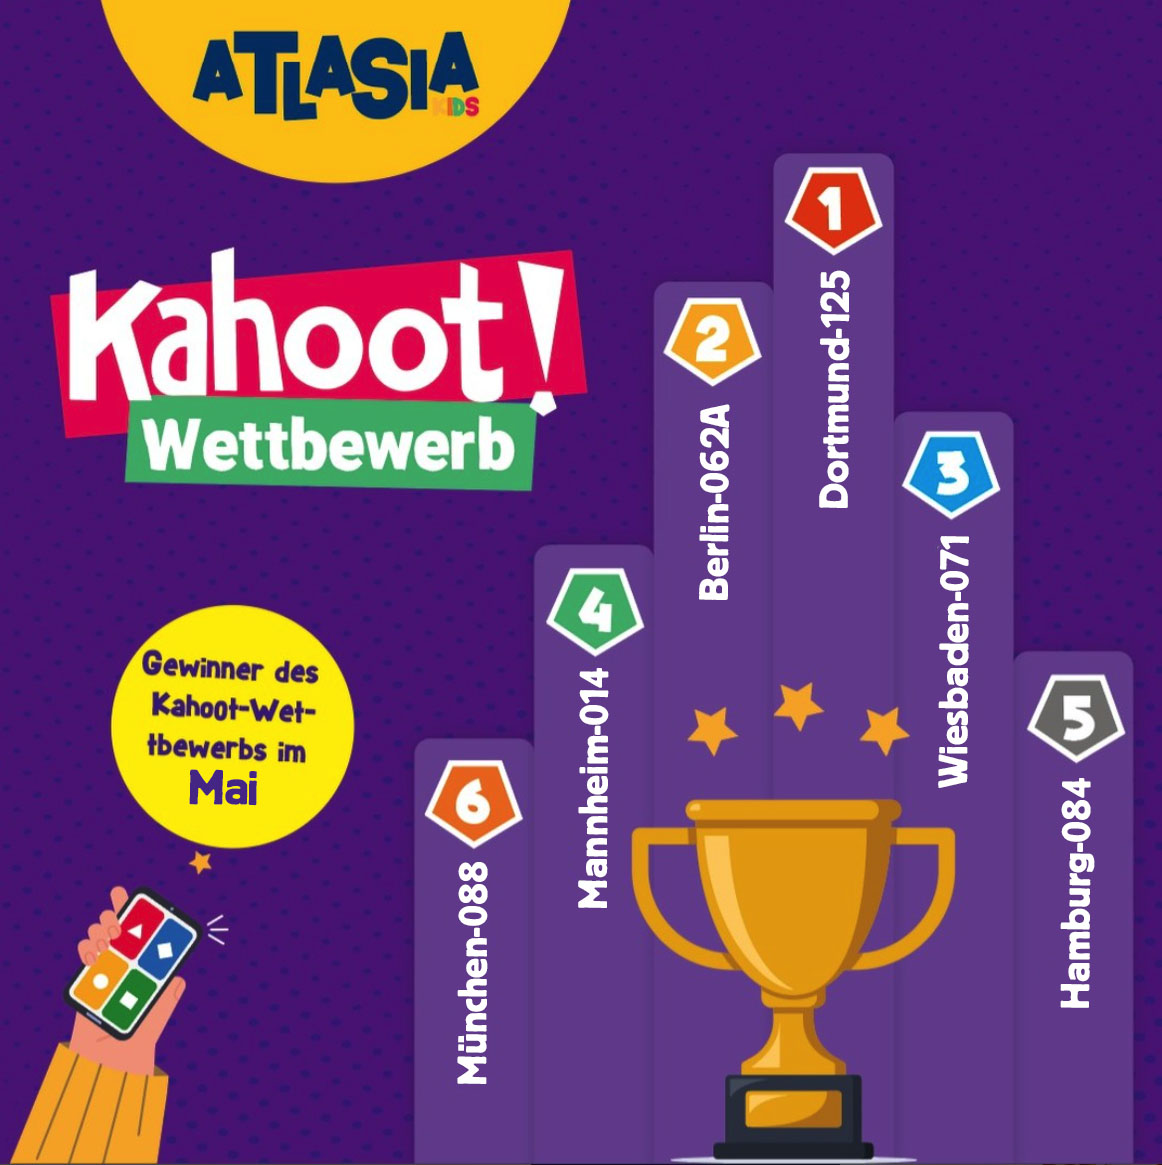 Gewinner des Kahoot-Wettbewerbs im Mai

AtlasiaKids Website
atlasia.de

jetzt abonnieren
atlasia.de/abonnement/

Atlasiade Youtube-Kanal
youtube.com/@atlasiade

Atlasia Facebook:
facebook.com/atlasia.de #AtlasiaKids #Atlasiade #deutschland #Kinder #kids